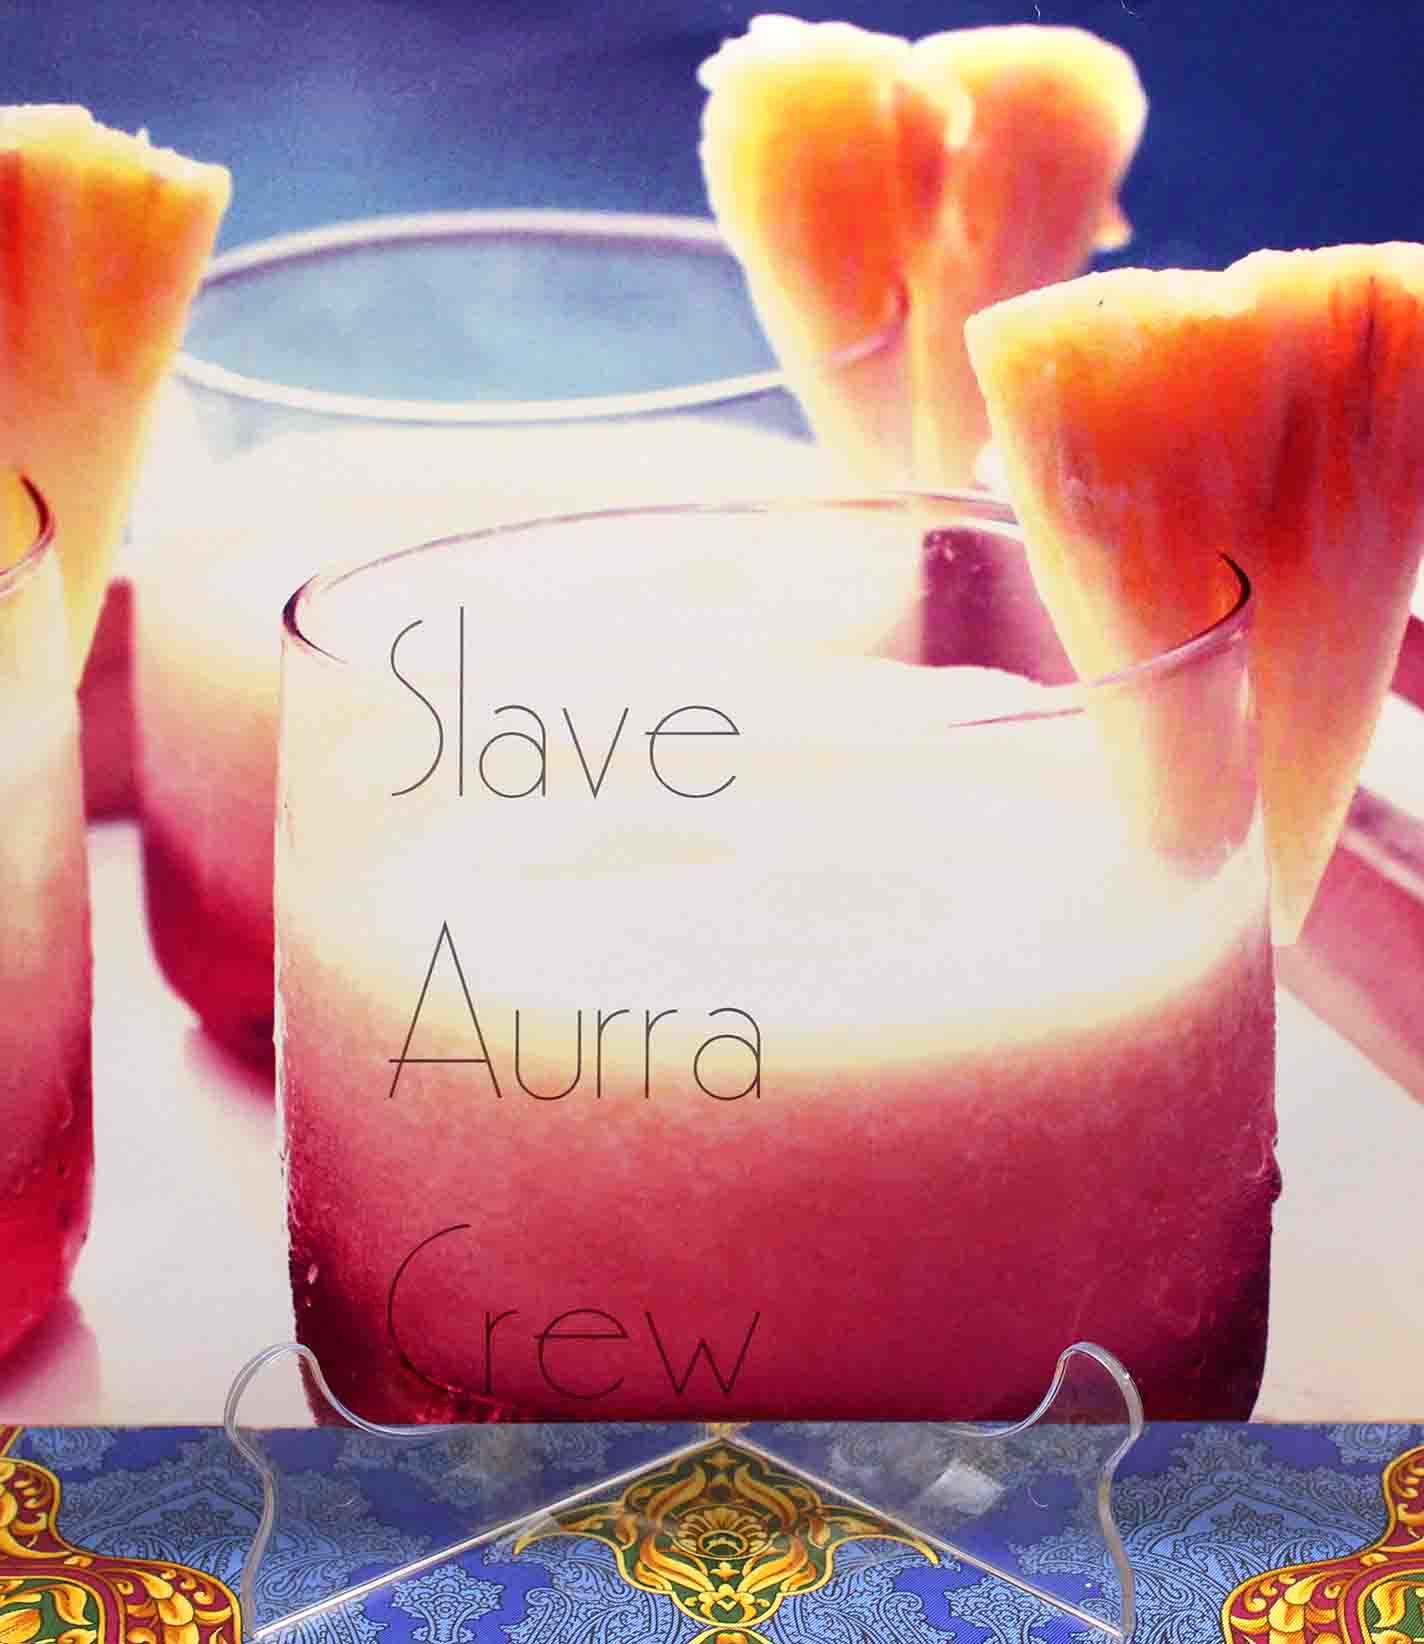 Slave Aurra Crew ‎– Conversation 01